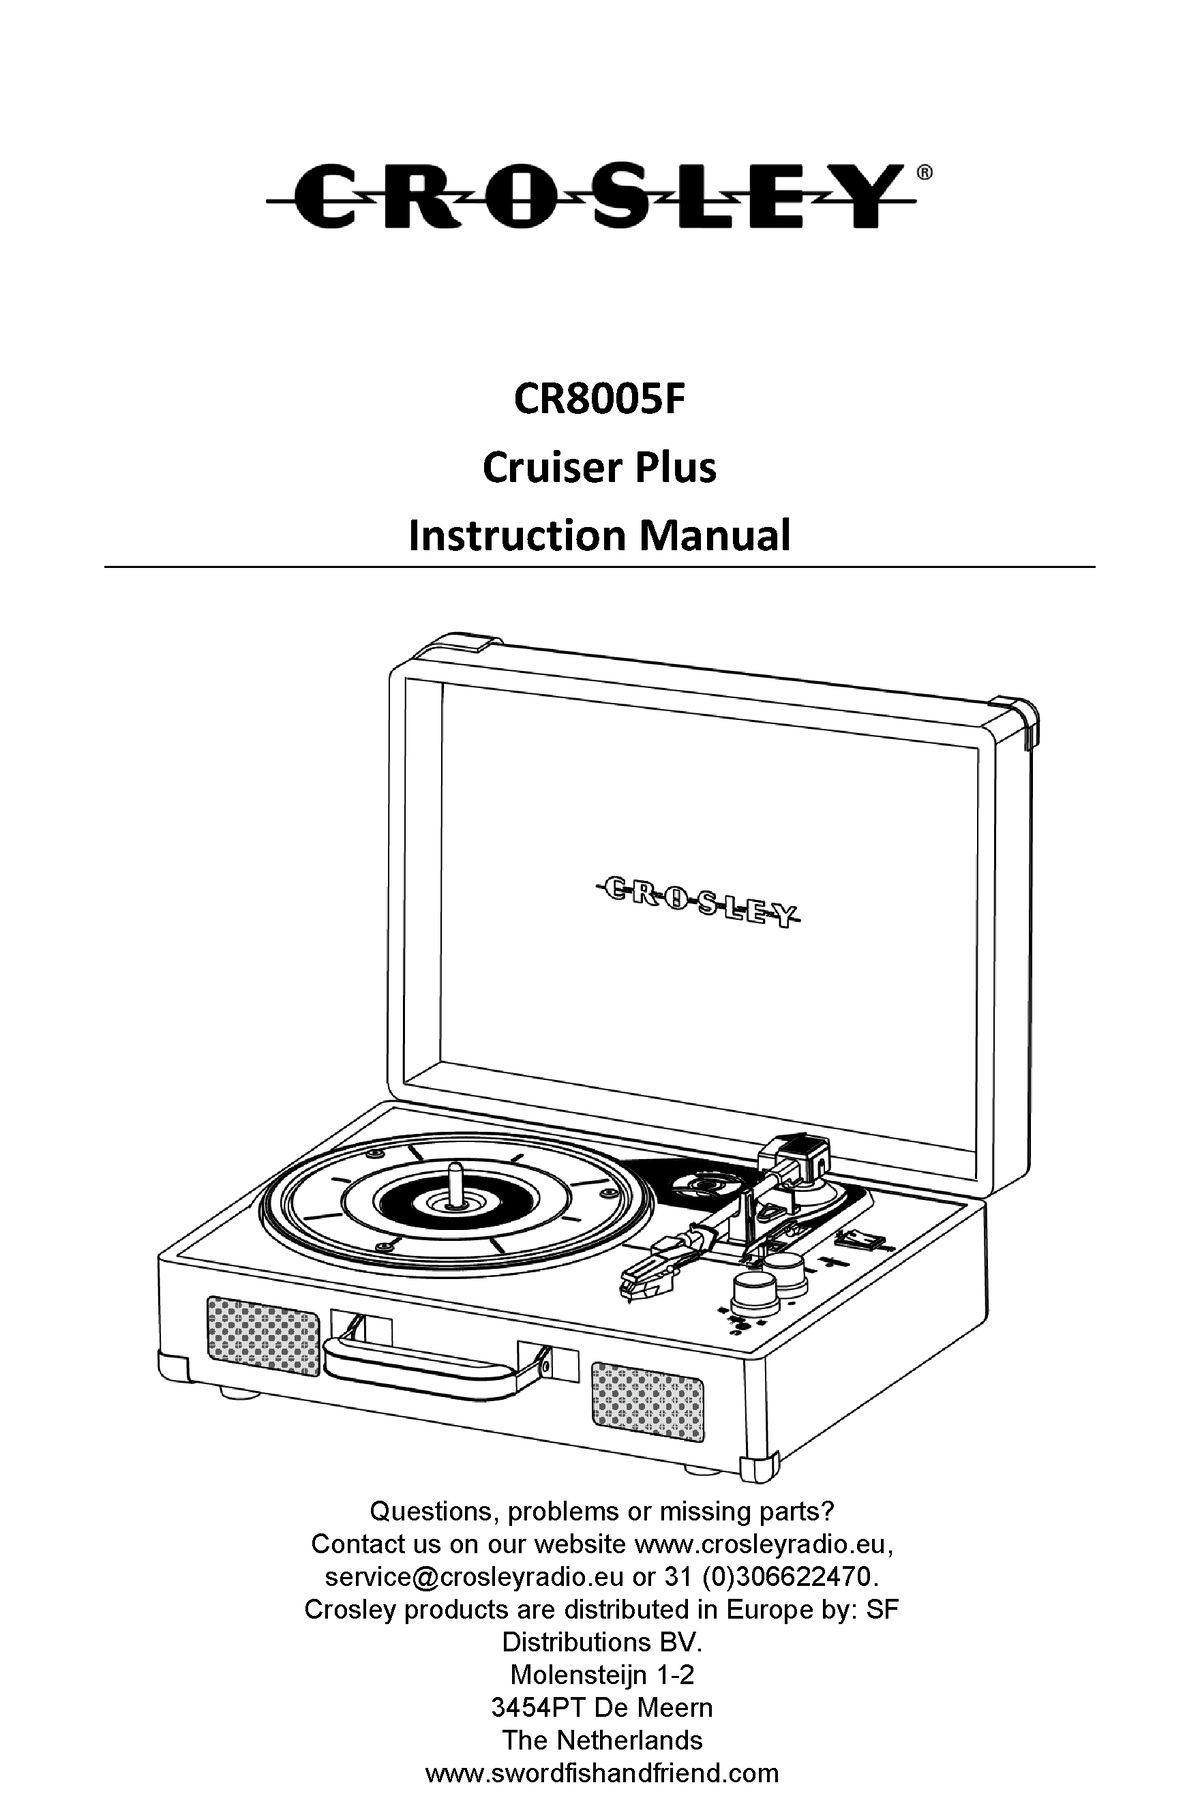 Crosley cruiser plus cr8005f donkergrijs - CR8005F Cruiser Plus Instruction  Manual Questions, - Studeersnel